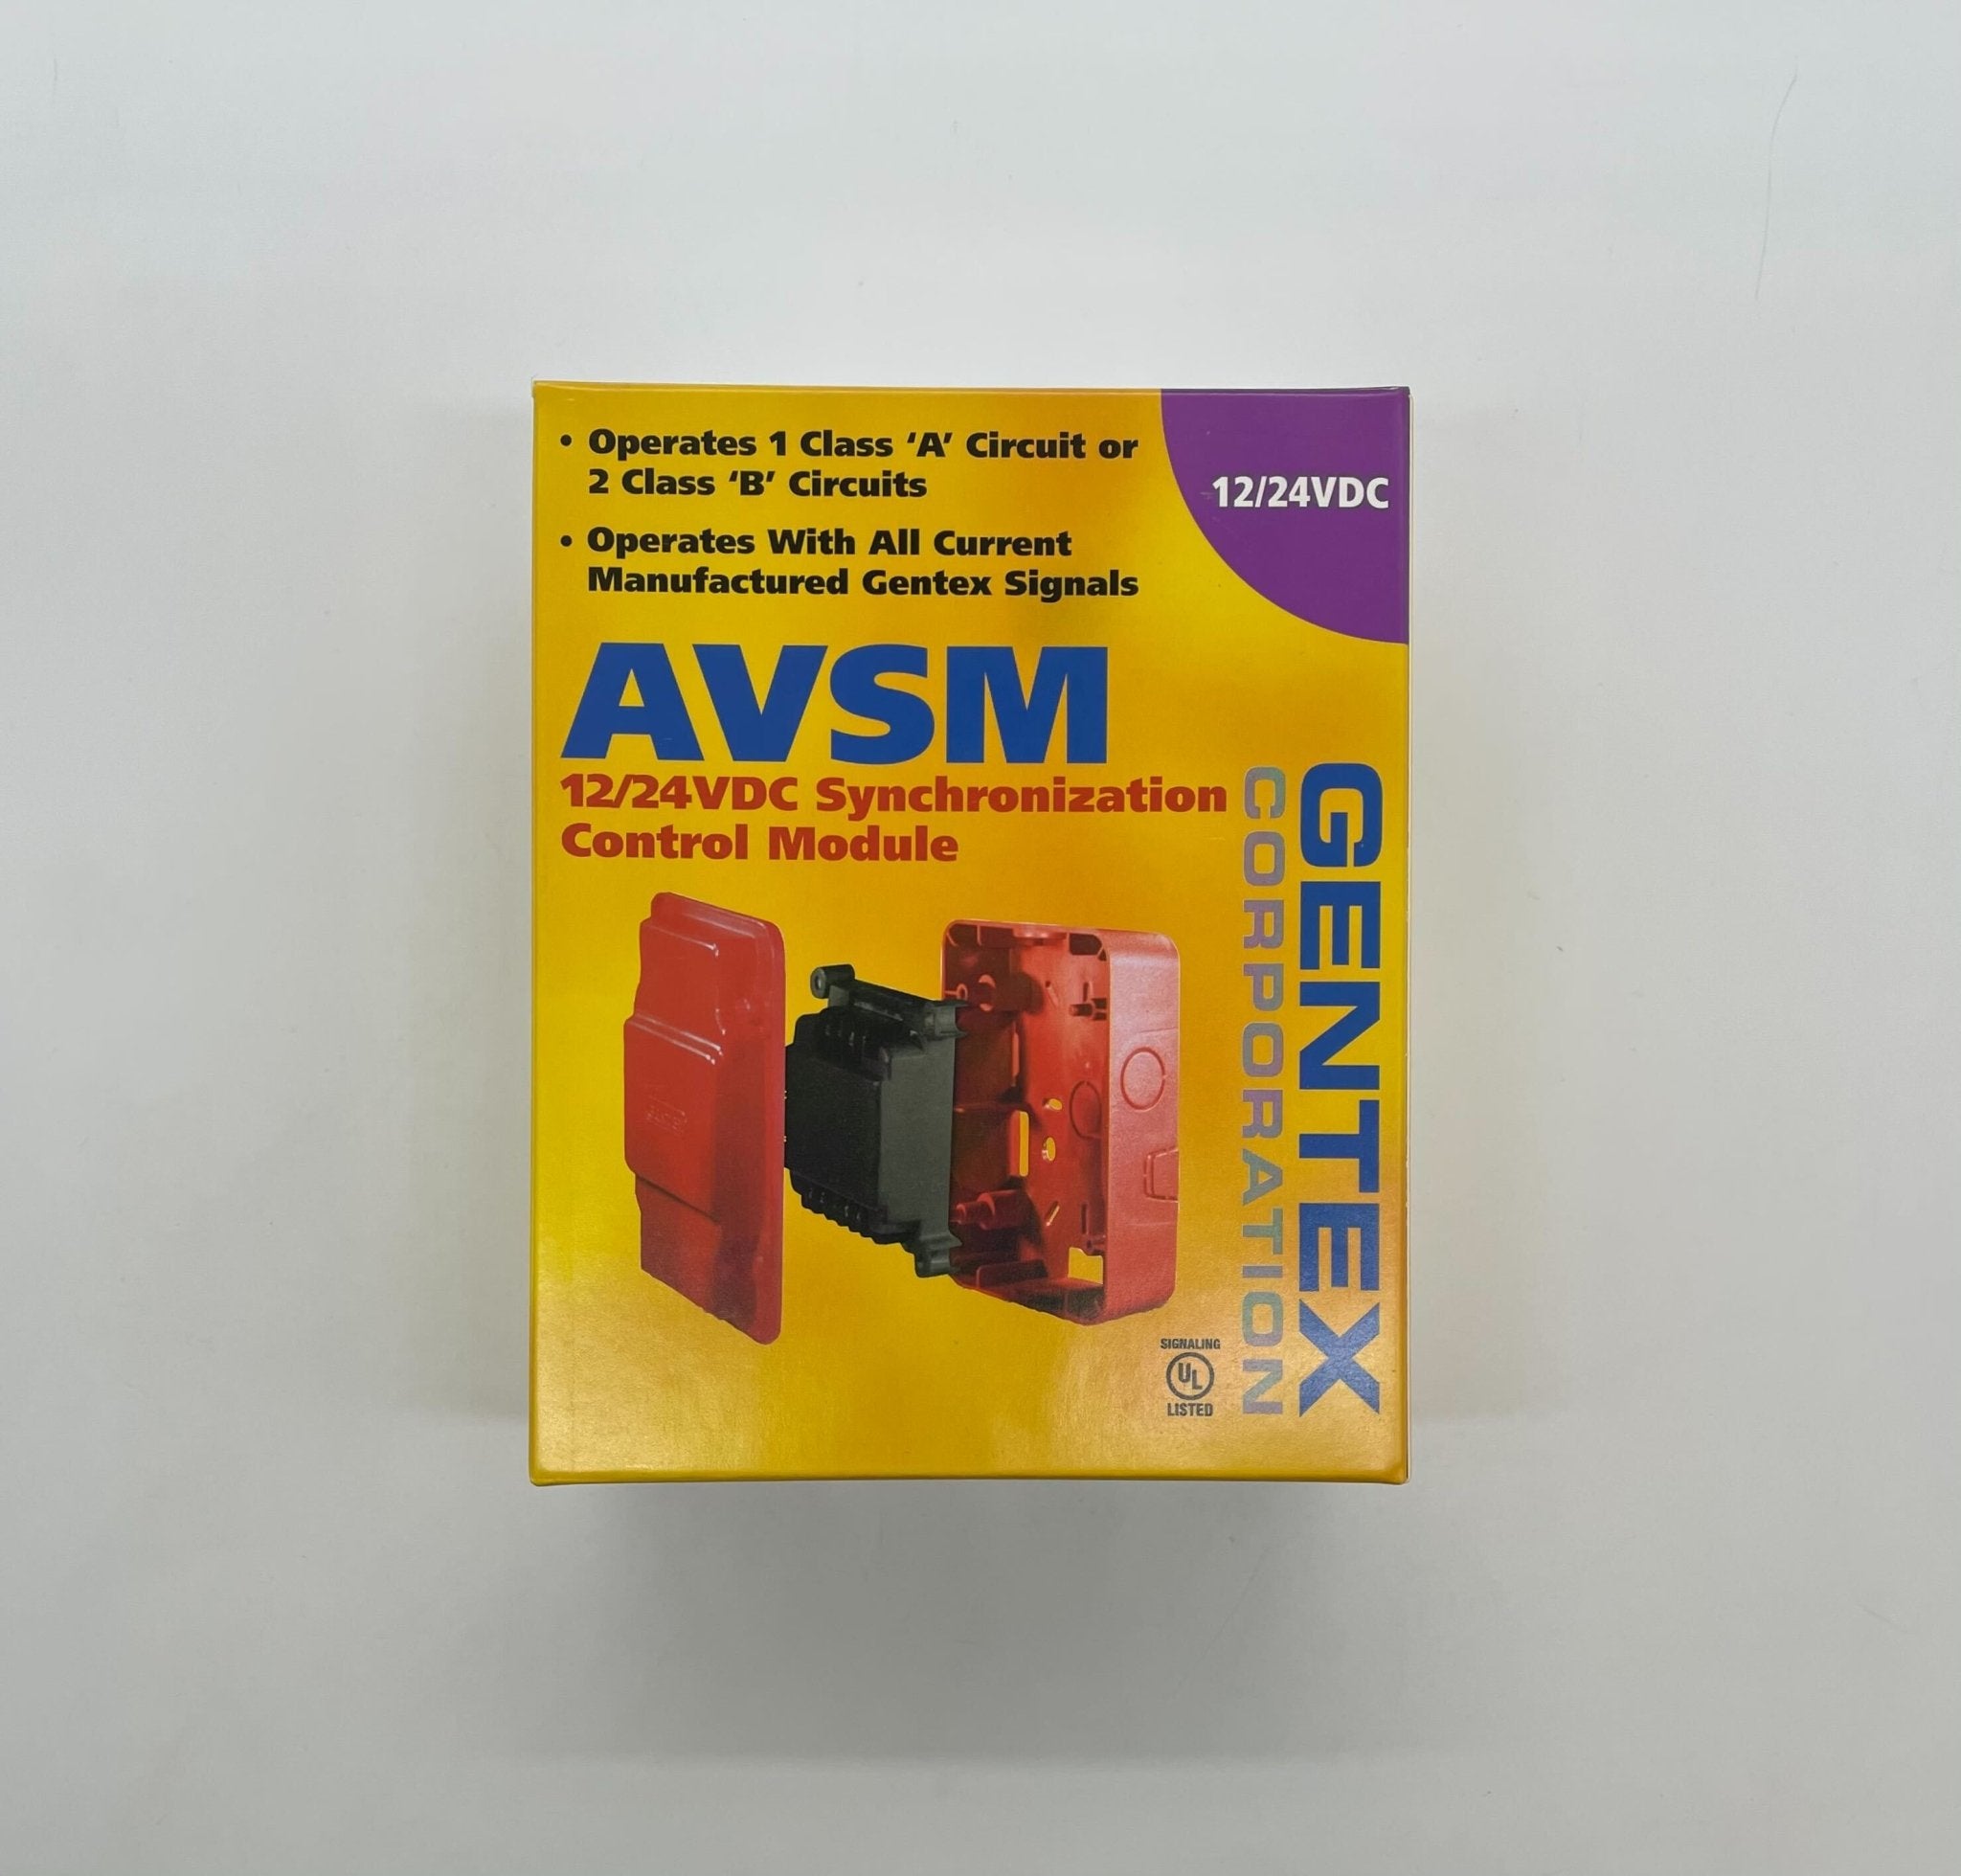 Potter AVSMR - The Fire Alarm Supplier